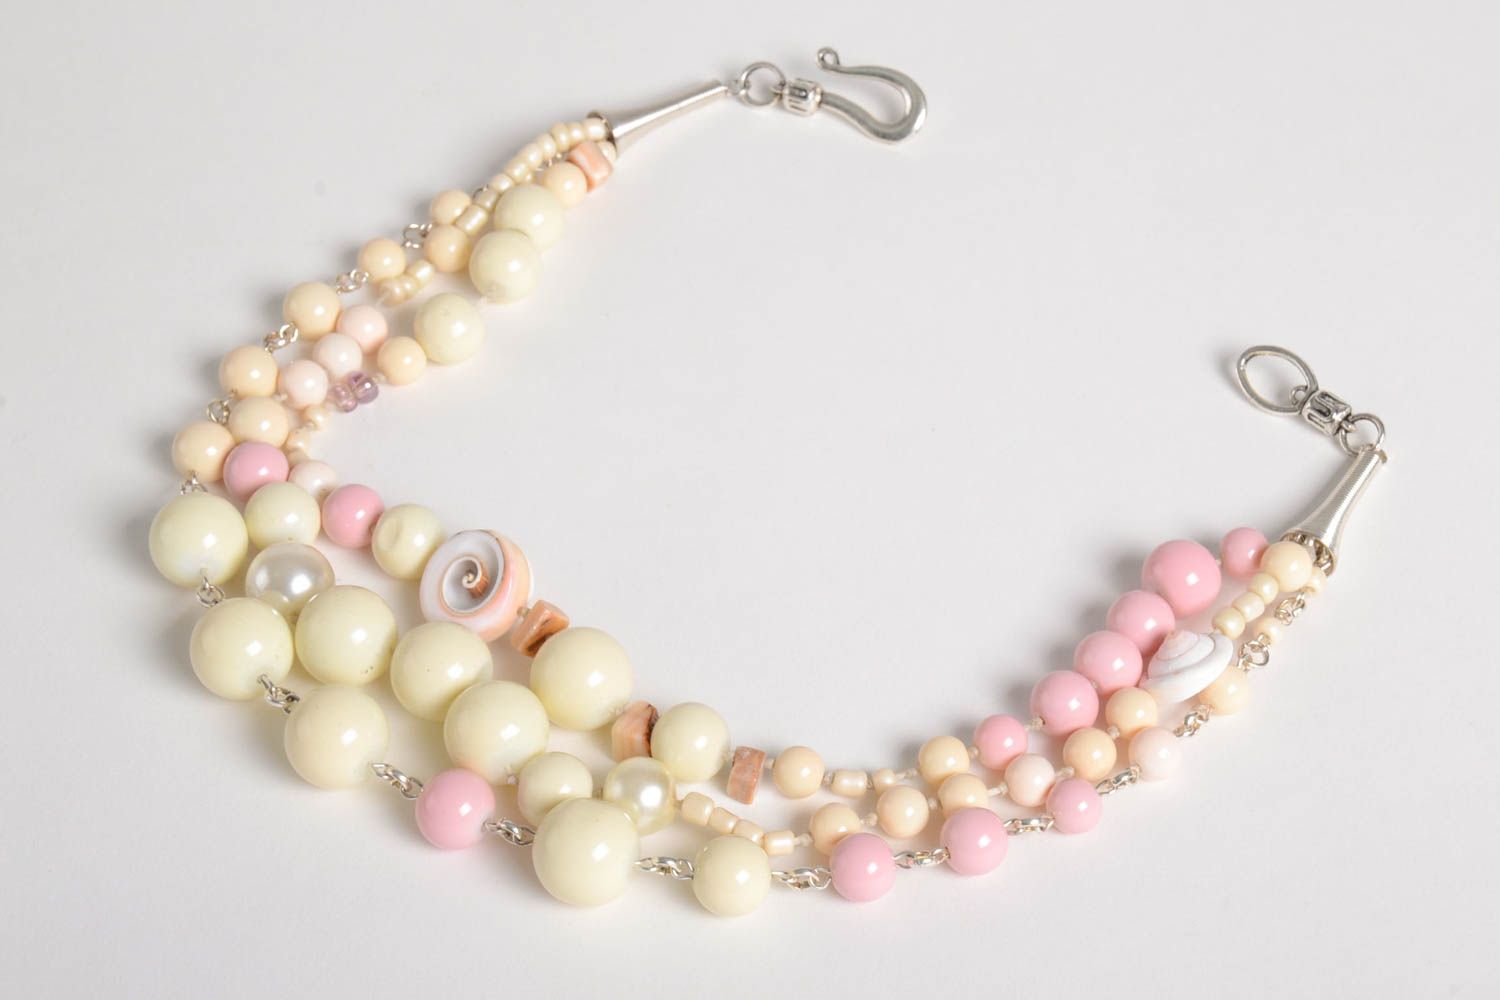 Beautiful handmade beaded necklace elegant bead necklace cool jewelry designs photo 5